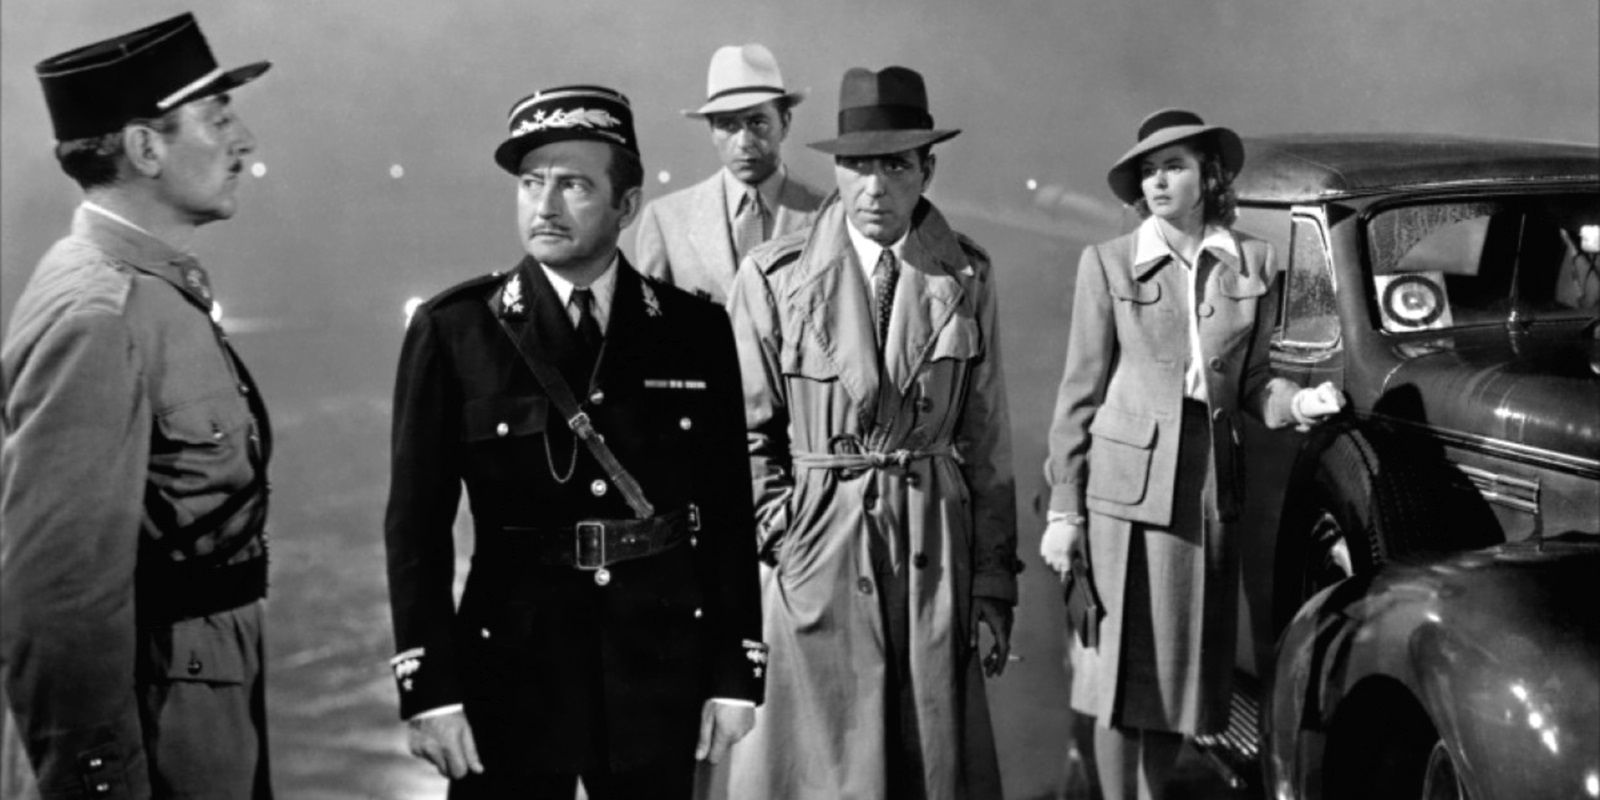 The Nazis in Casablanca